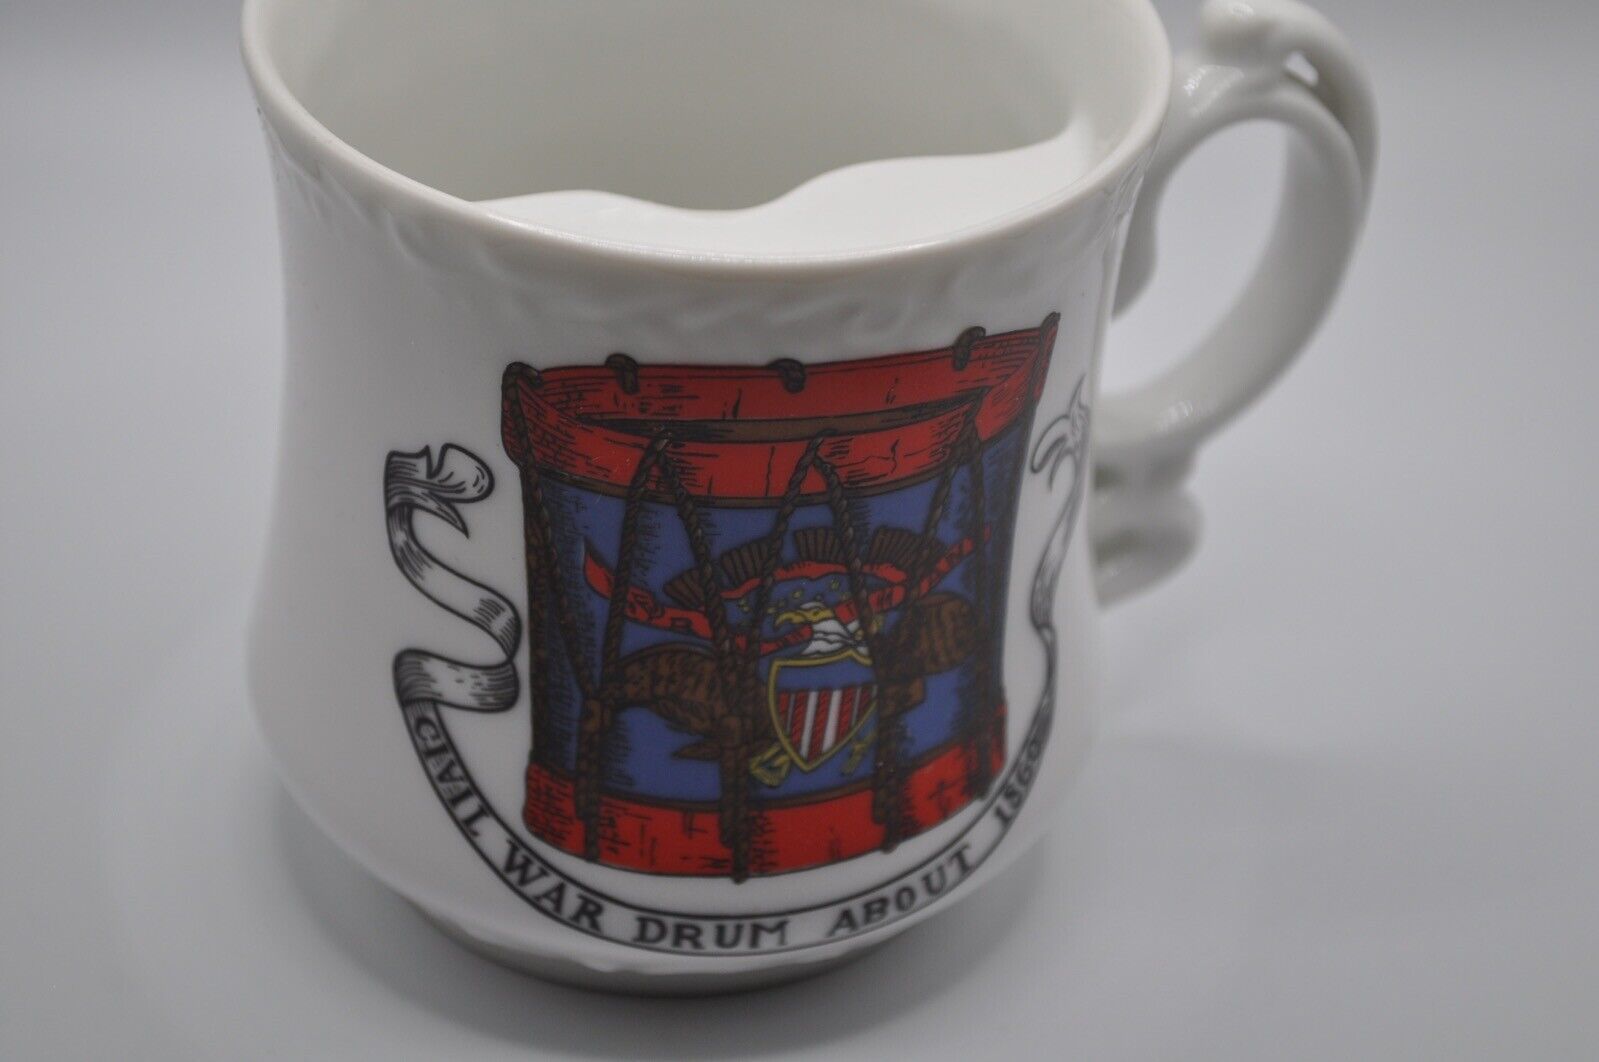 Vintage Shave Mug Civil War Drum Royal Crown Mug with Handle